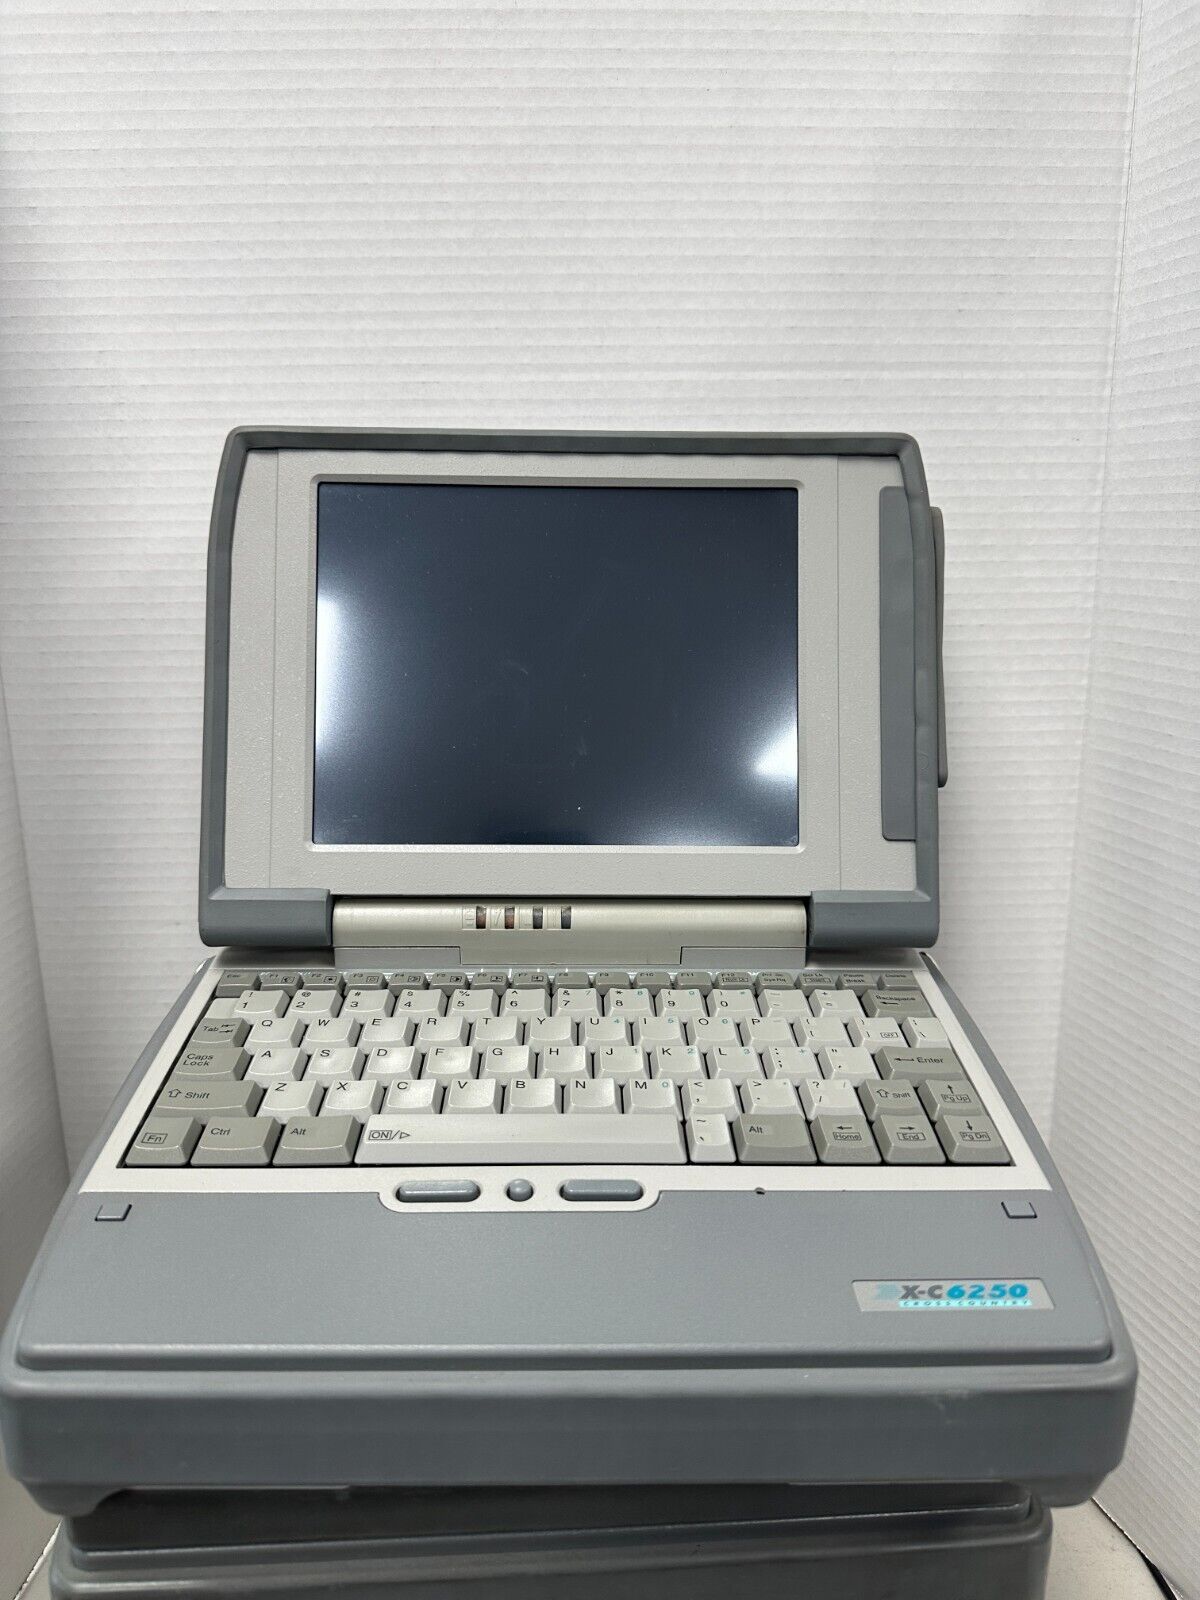 Itronix Military-Grade Laptop X-C 6250, LOT OF 4, DOES NOT POWER ON, NO BATT #04